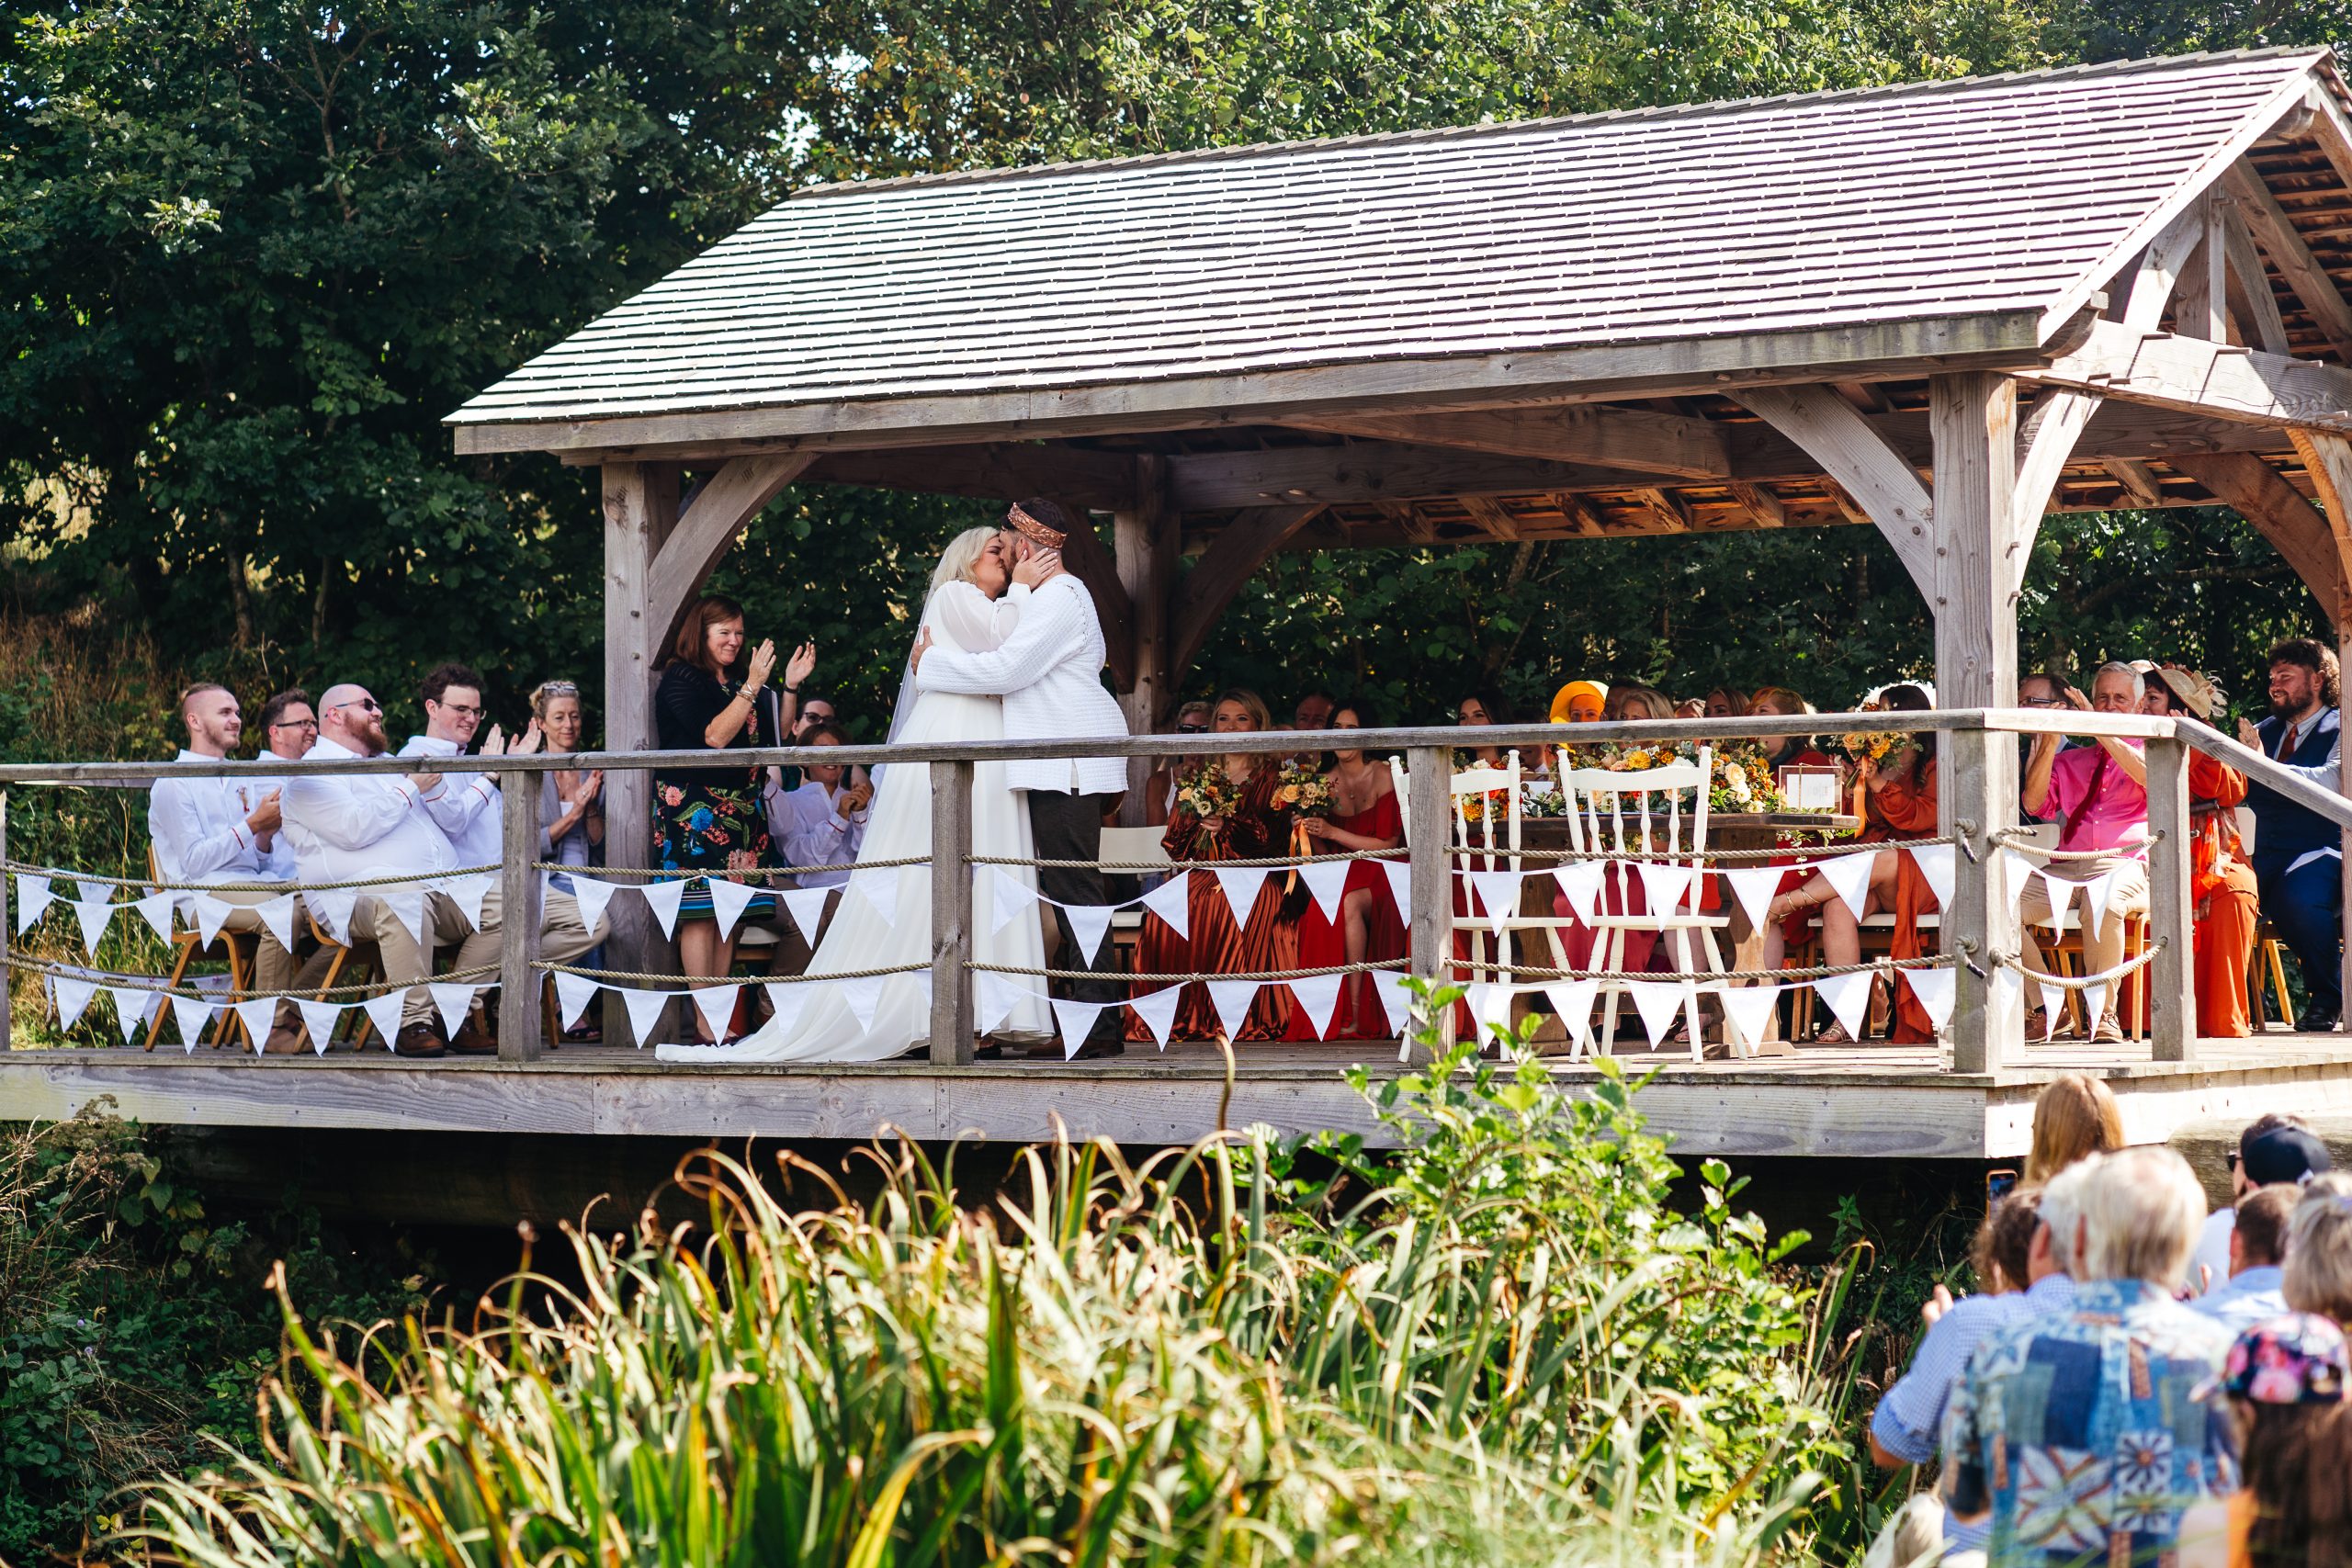 Clifford Barton Devon wedding photographer outdoor lake ceremony